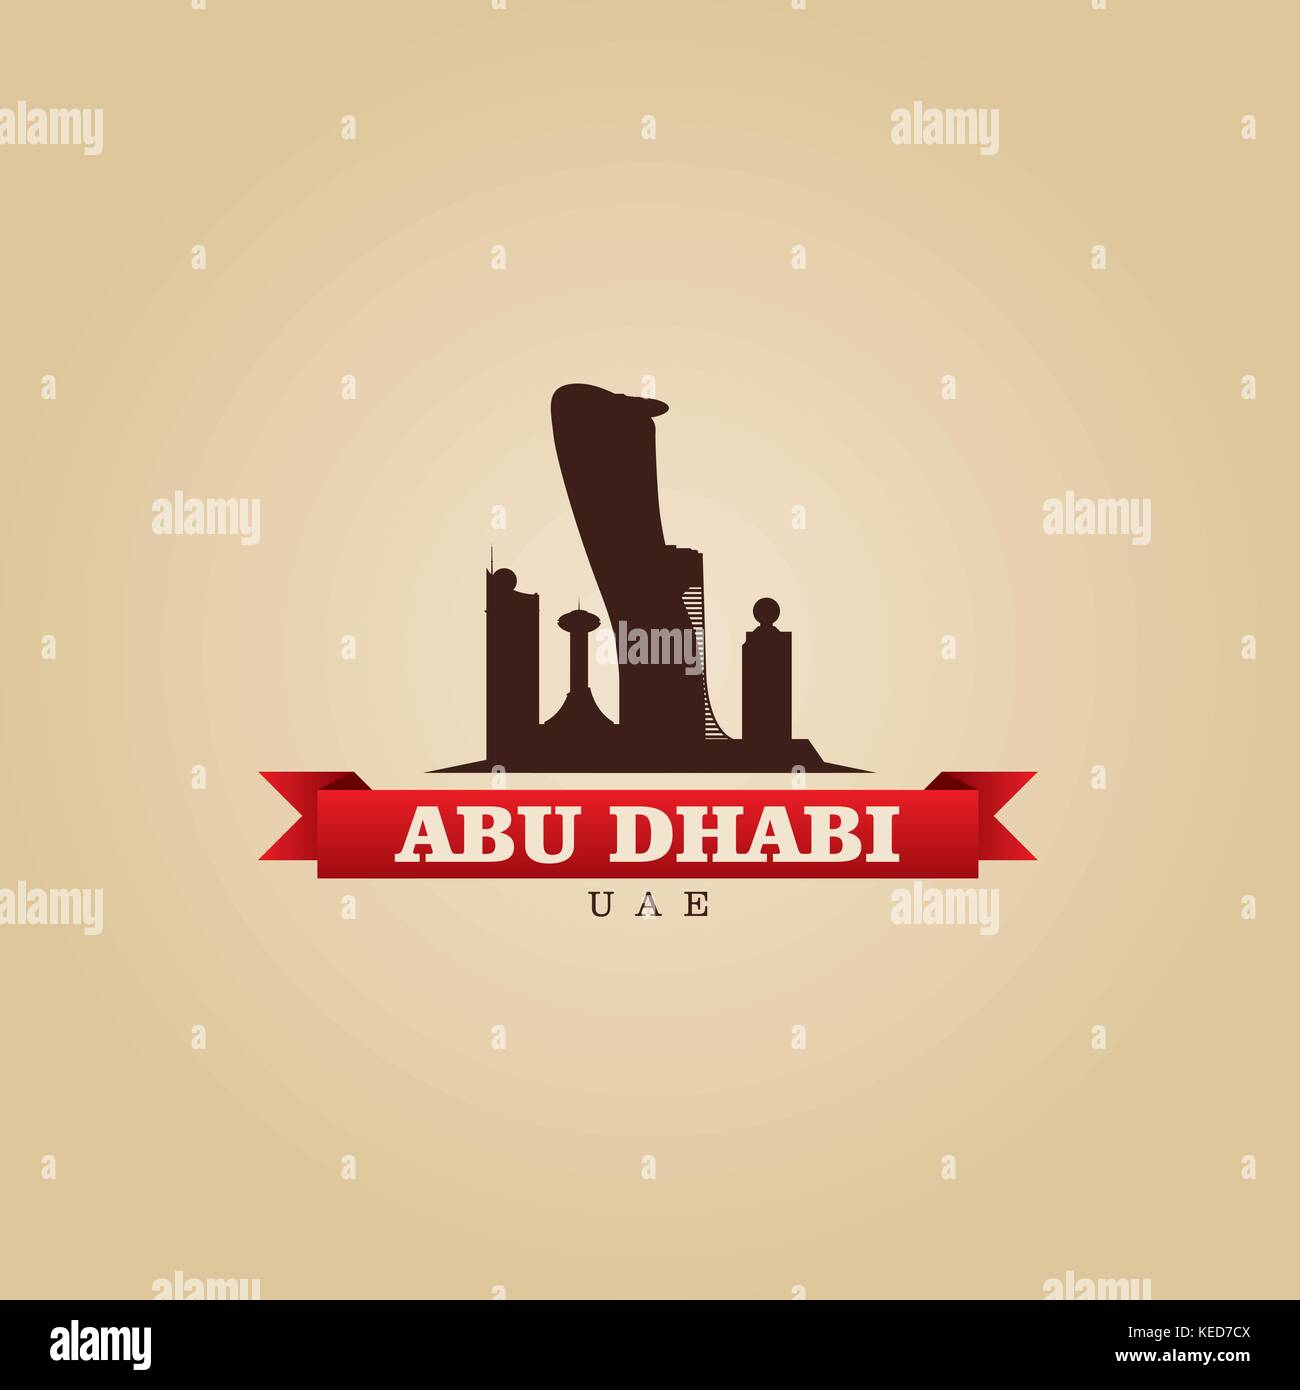 Abu Dhabi UAE city symbol vector illustration Stock Vector